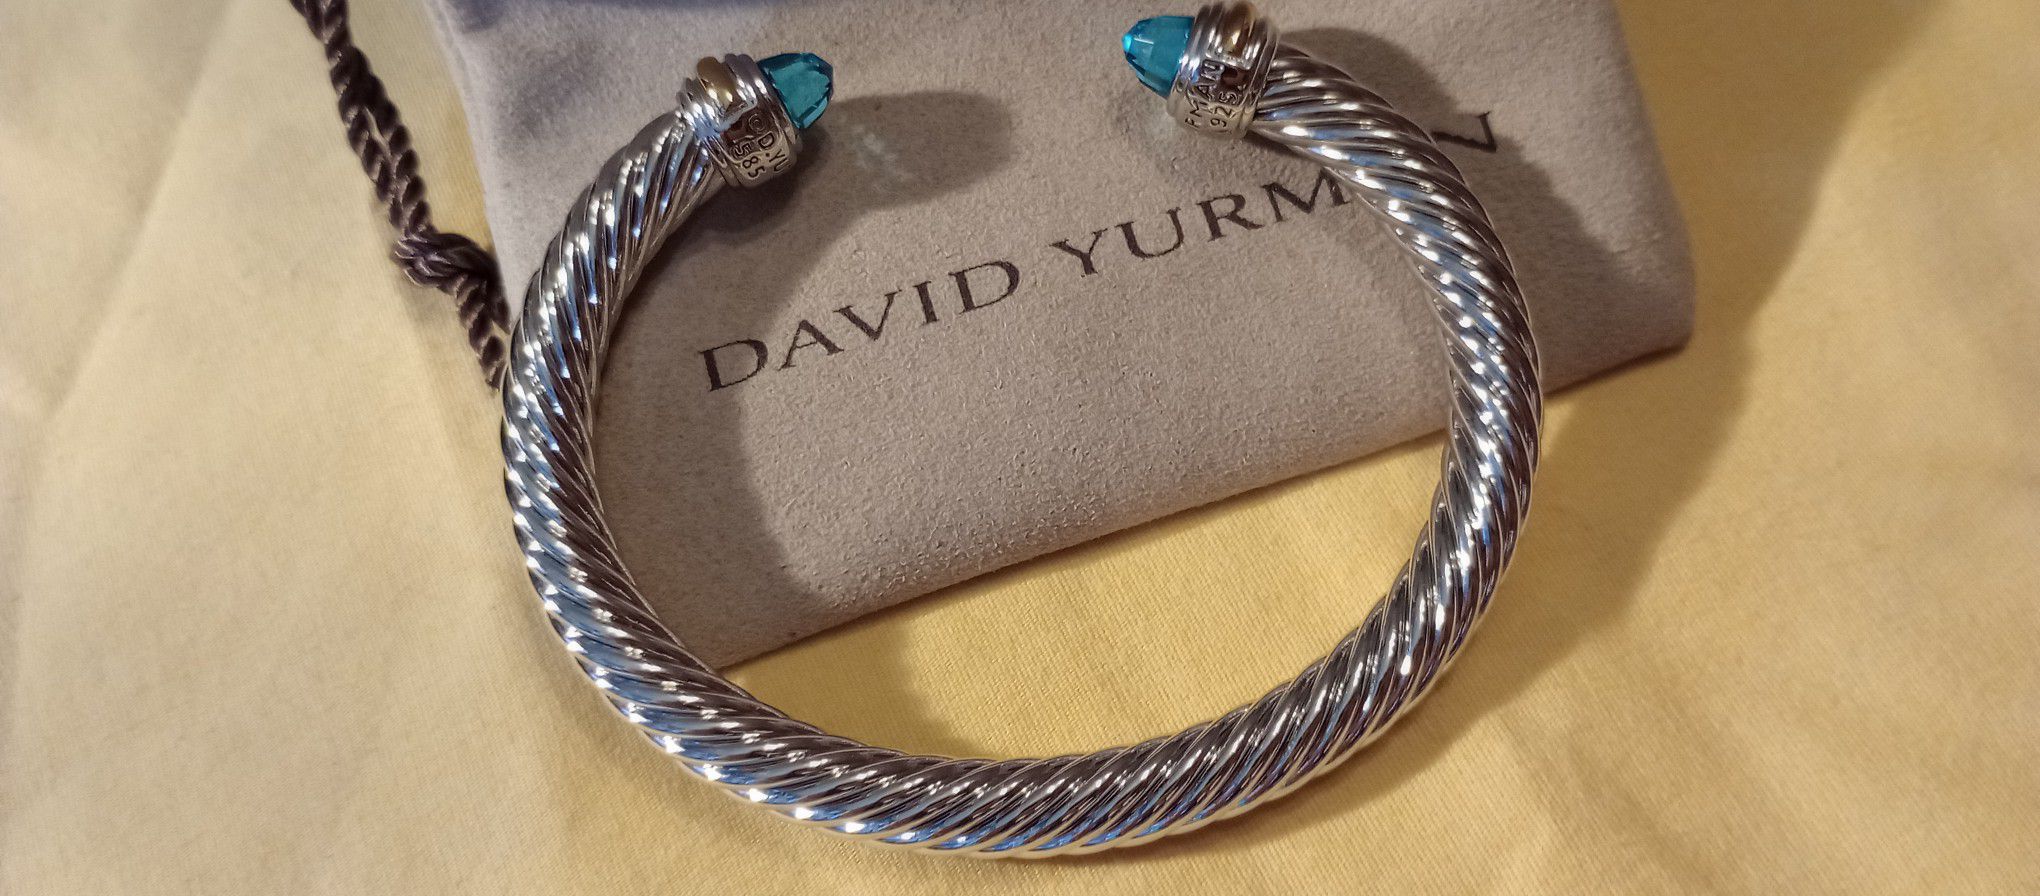 David Yurman Twisted Cable Cuff Bracelet W Blue Topaz Stones